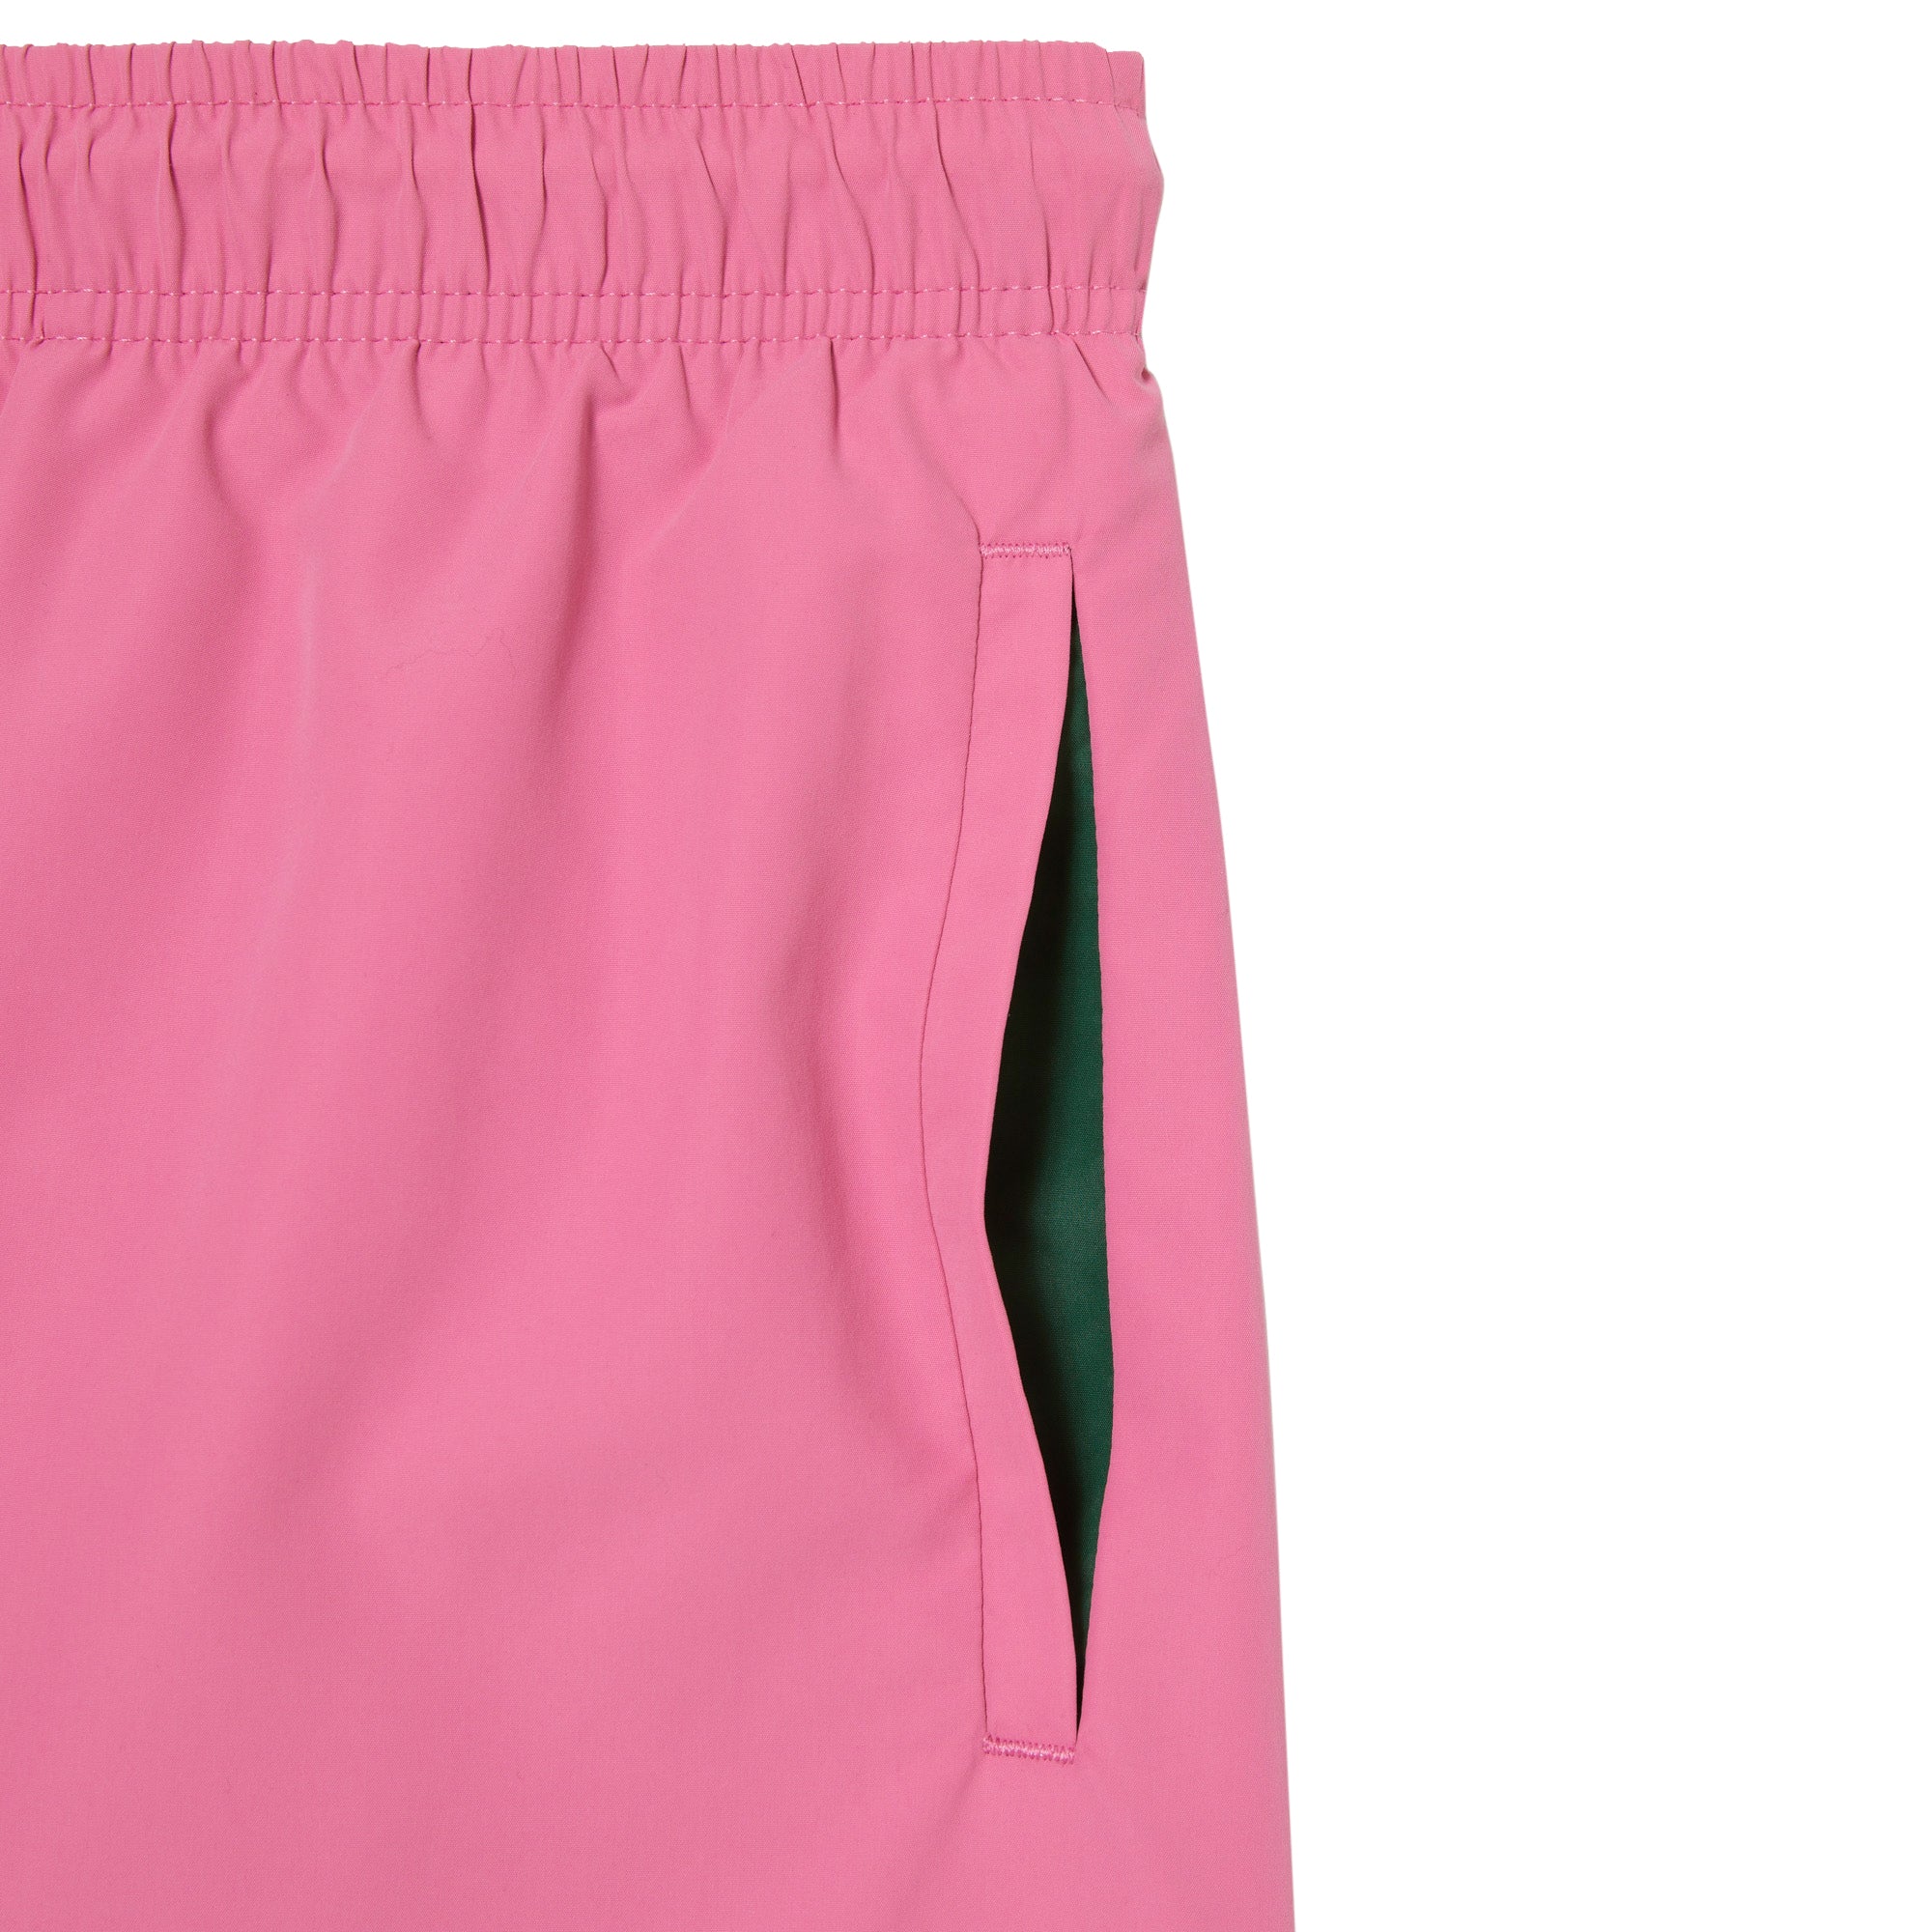 Lacoste Light Quick Dry Swim Shorts MH6270 - Reseda Pink